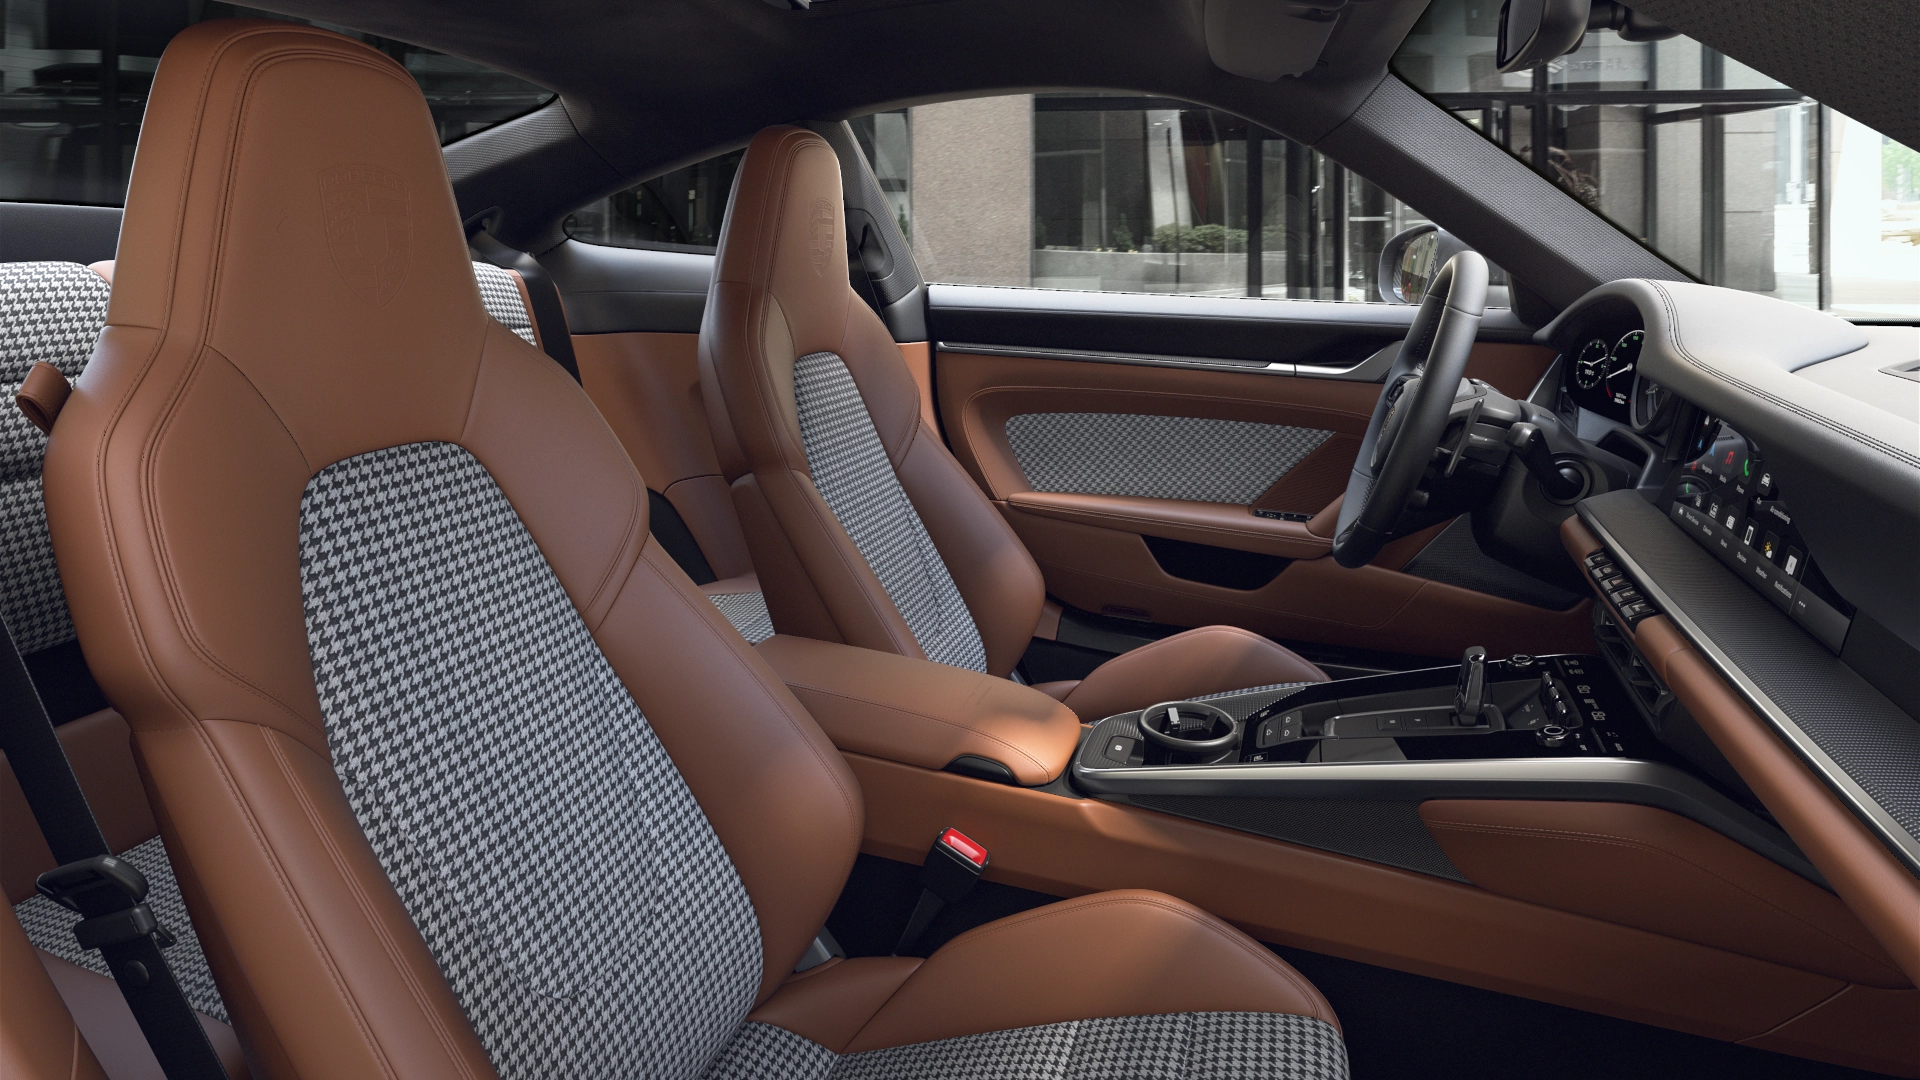 911 Turbo S interior view